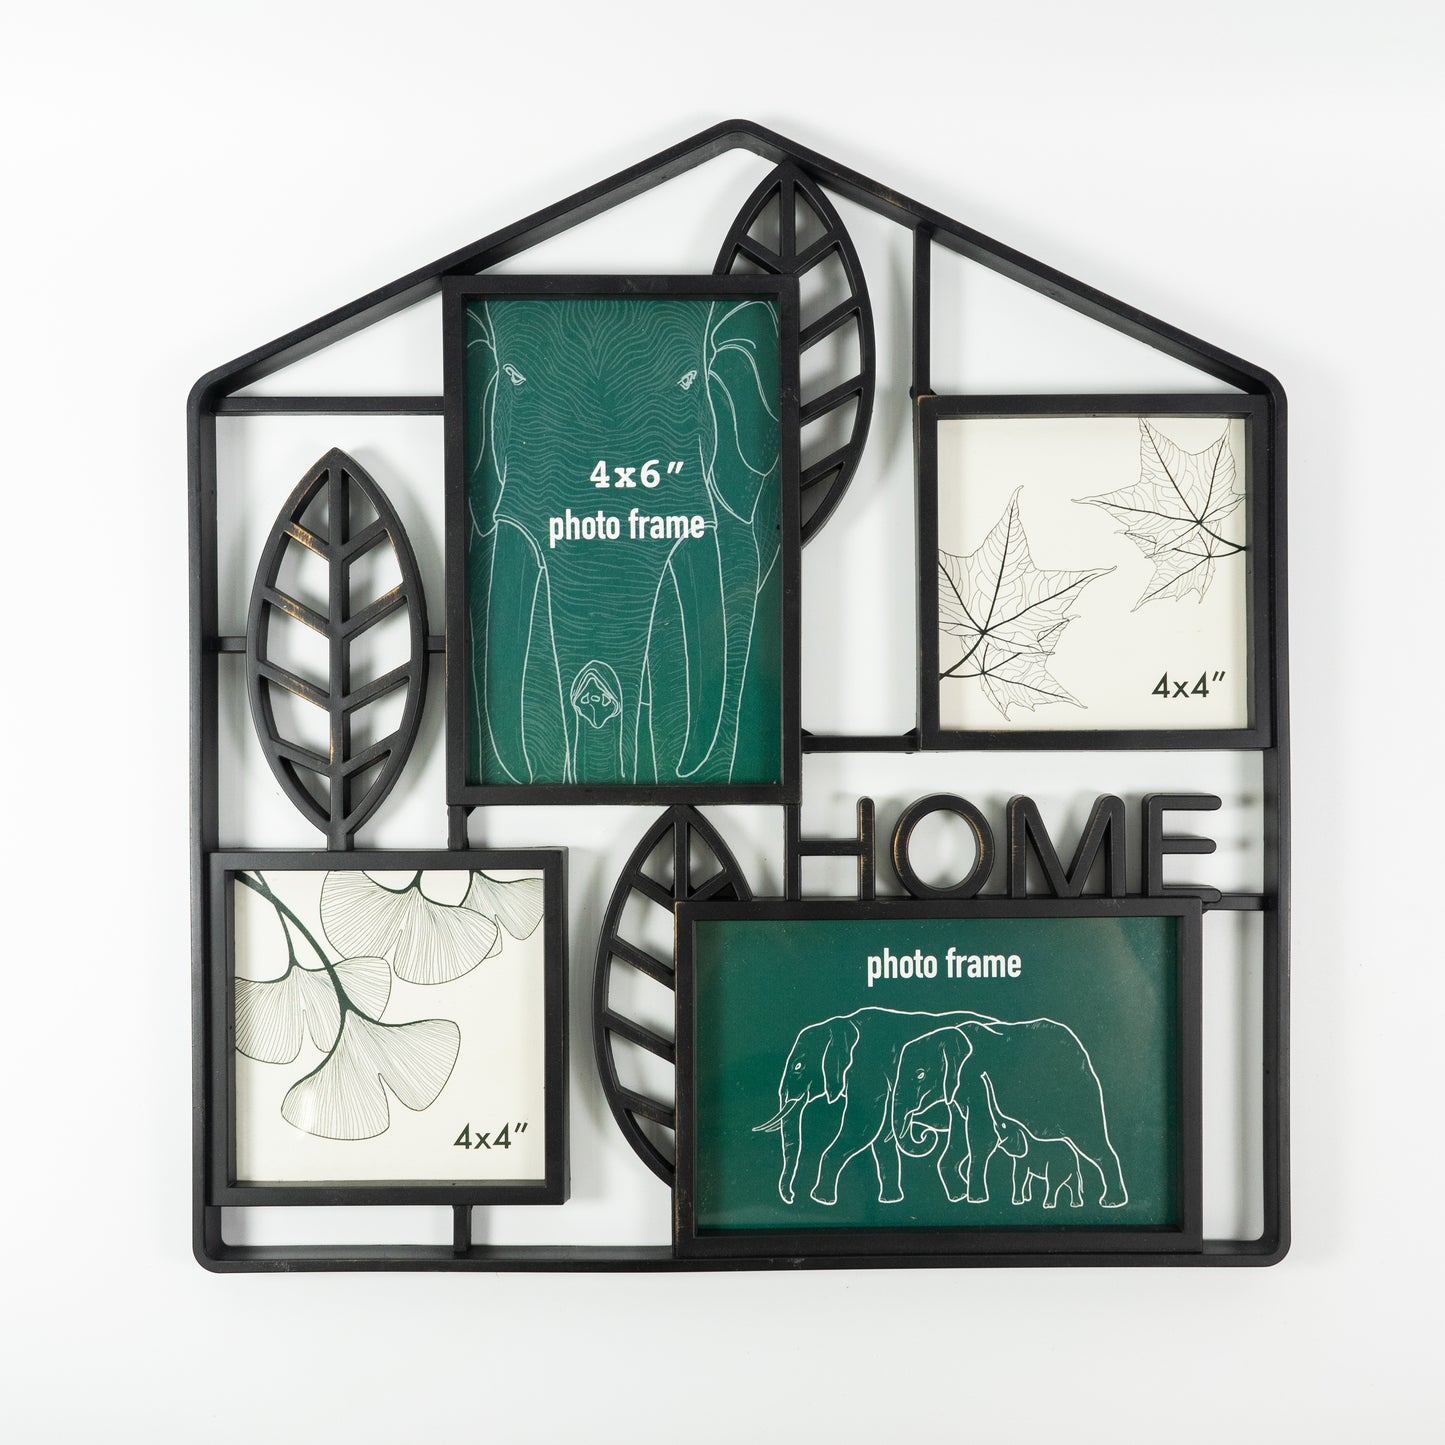 'Home' Frame